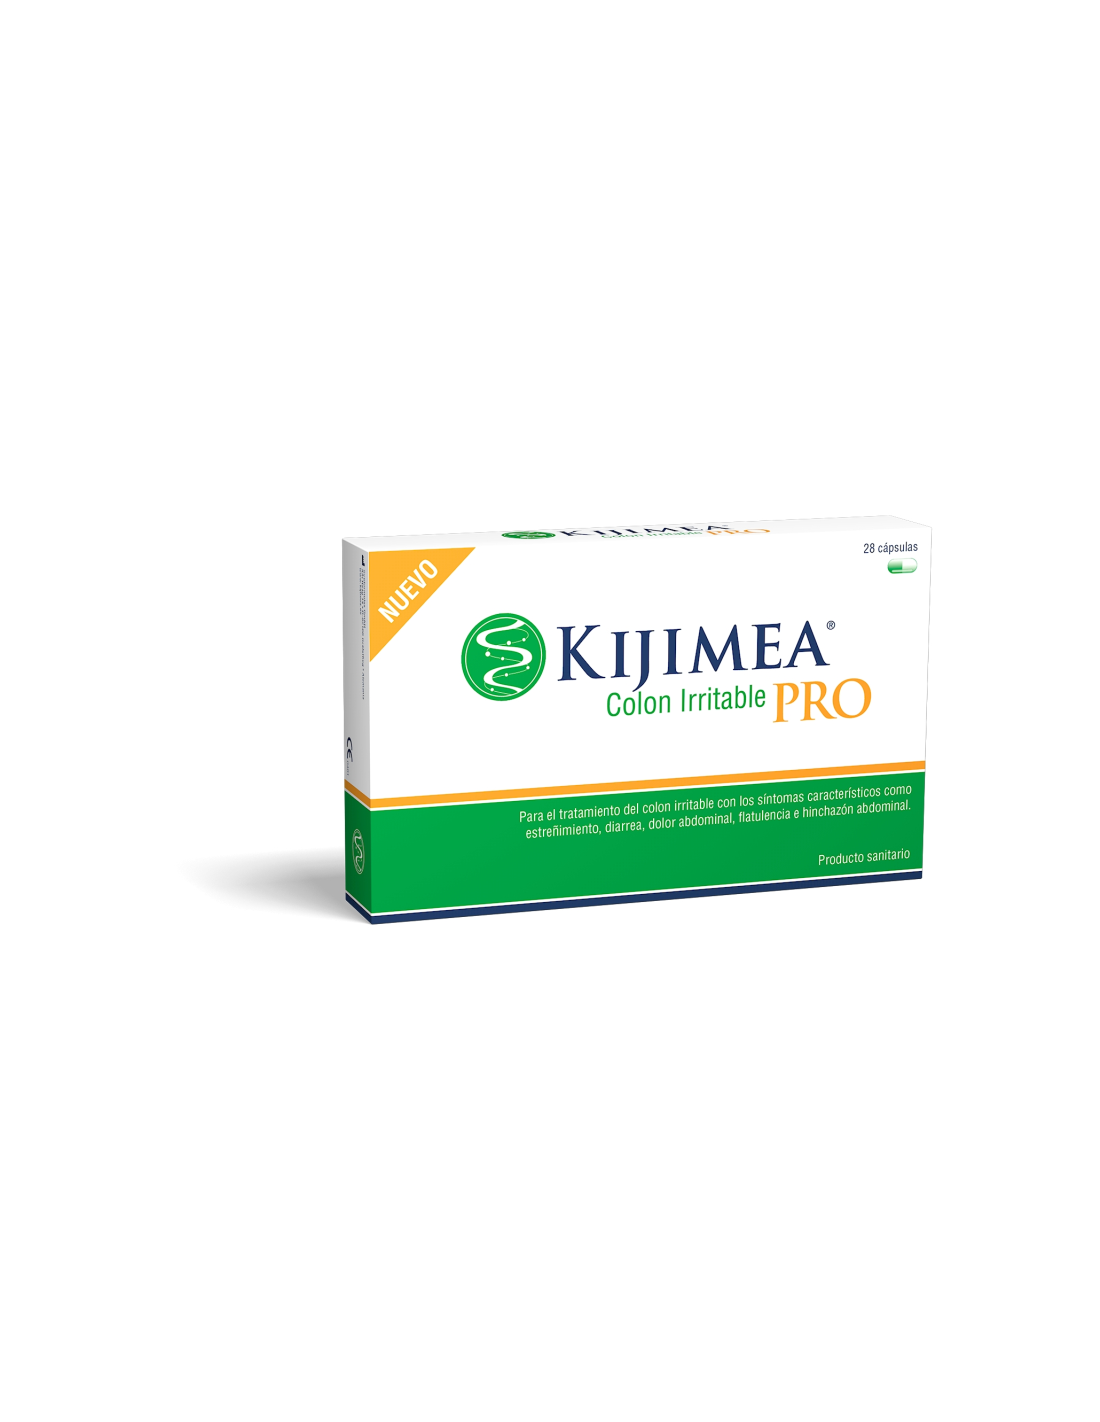 Kijimea® Côlon Irritable PRO